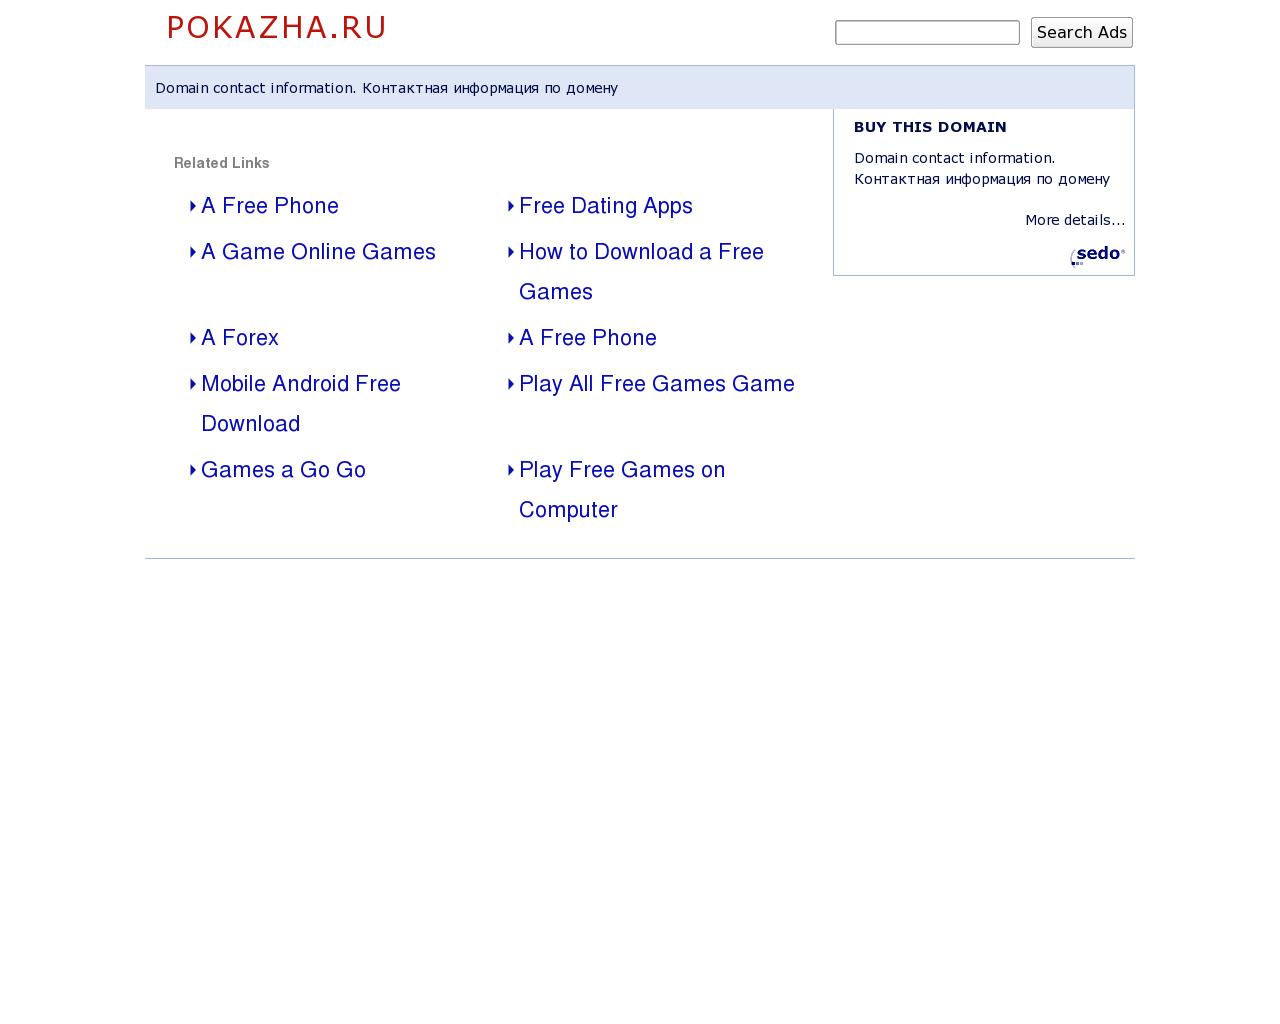 Изображение сайта pokazha.ru в разрешении 1280x1024